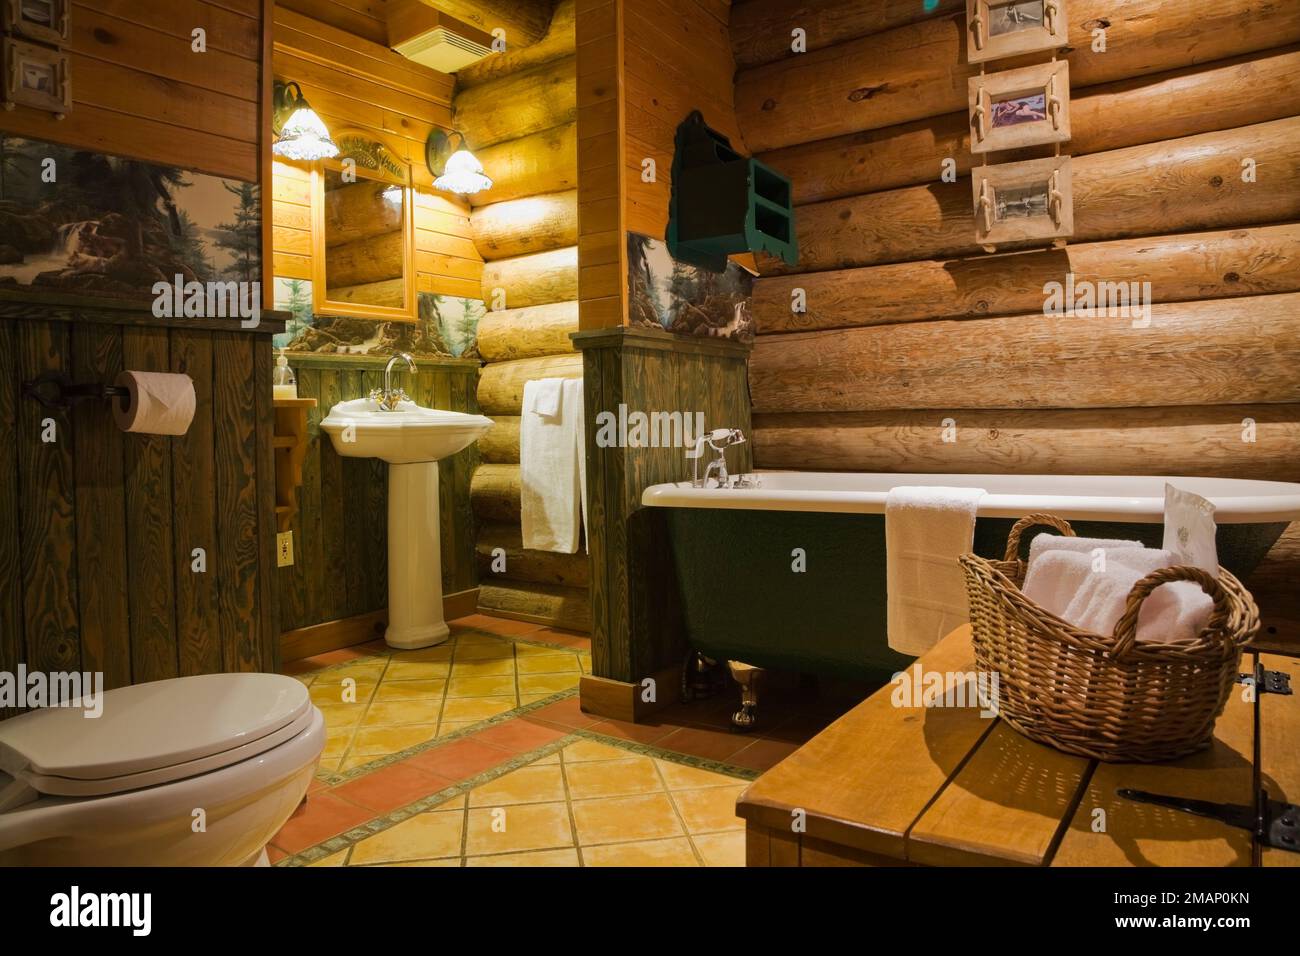 Toilet, pedestal sink and green freestanding roll top bathtub in main bathroom inside Scandinavian style log home. Stock Photo